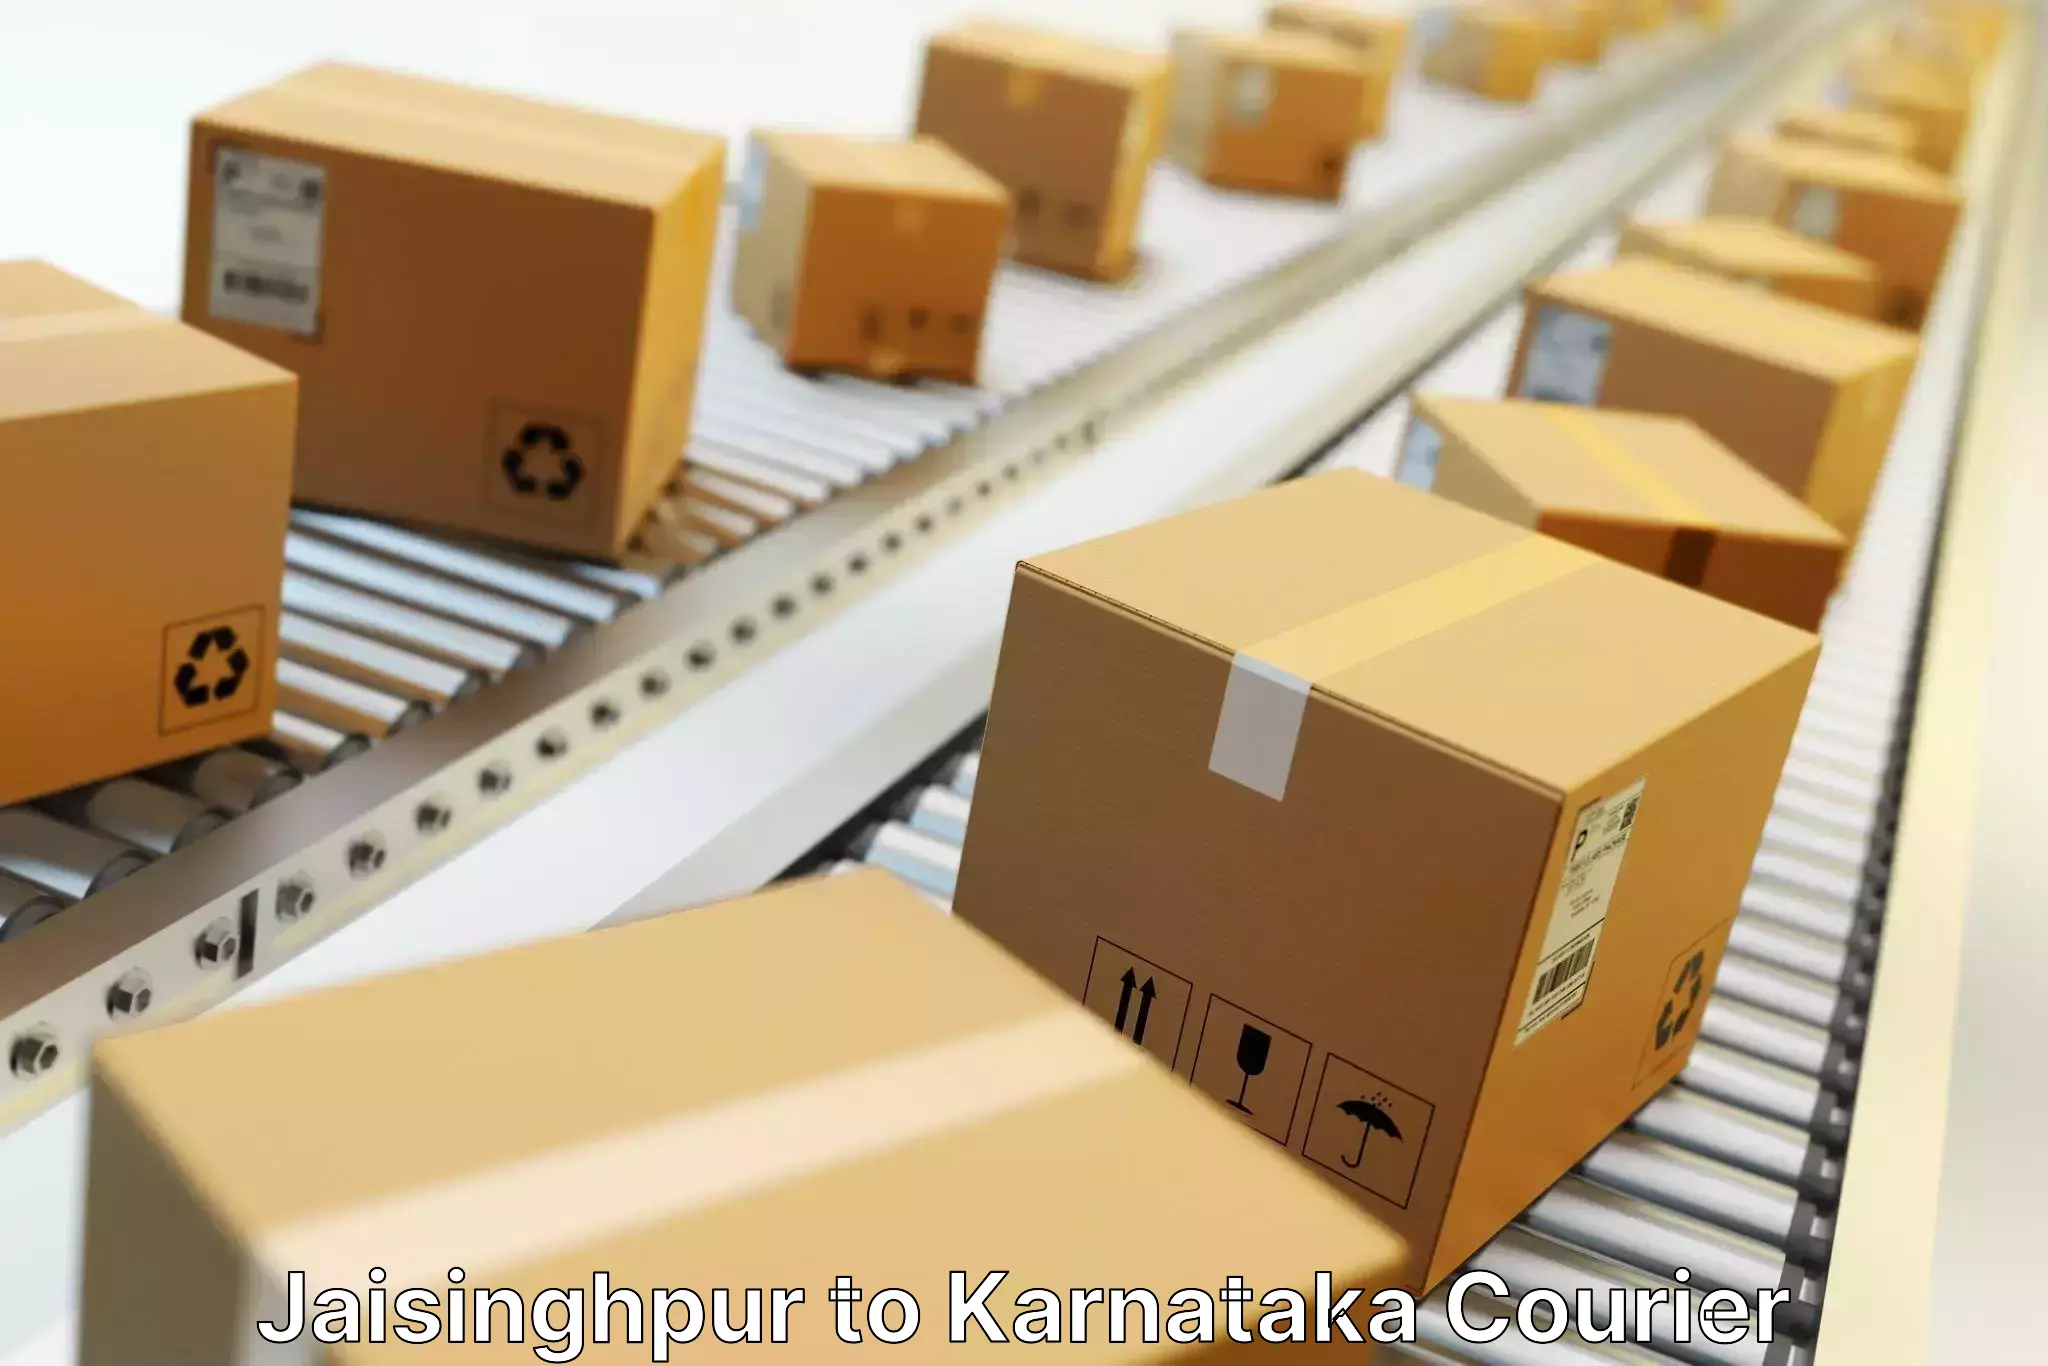 State-of-the-art courier technology Jaisinghpur to Karnataka